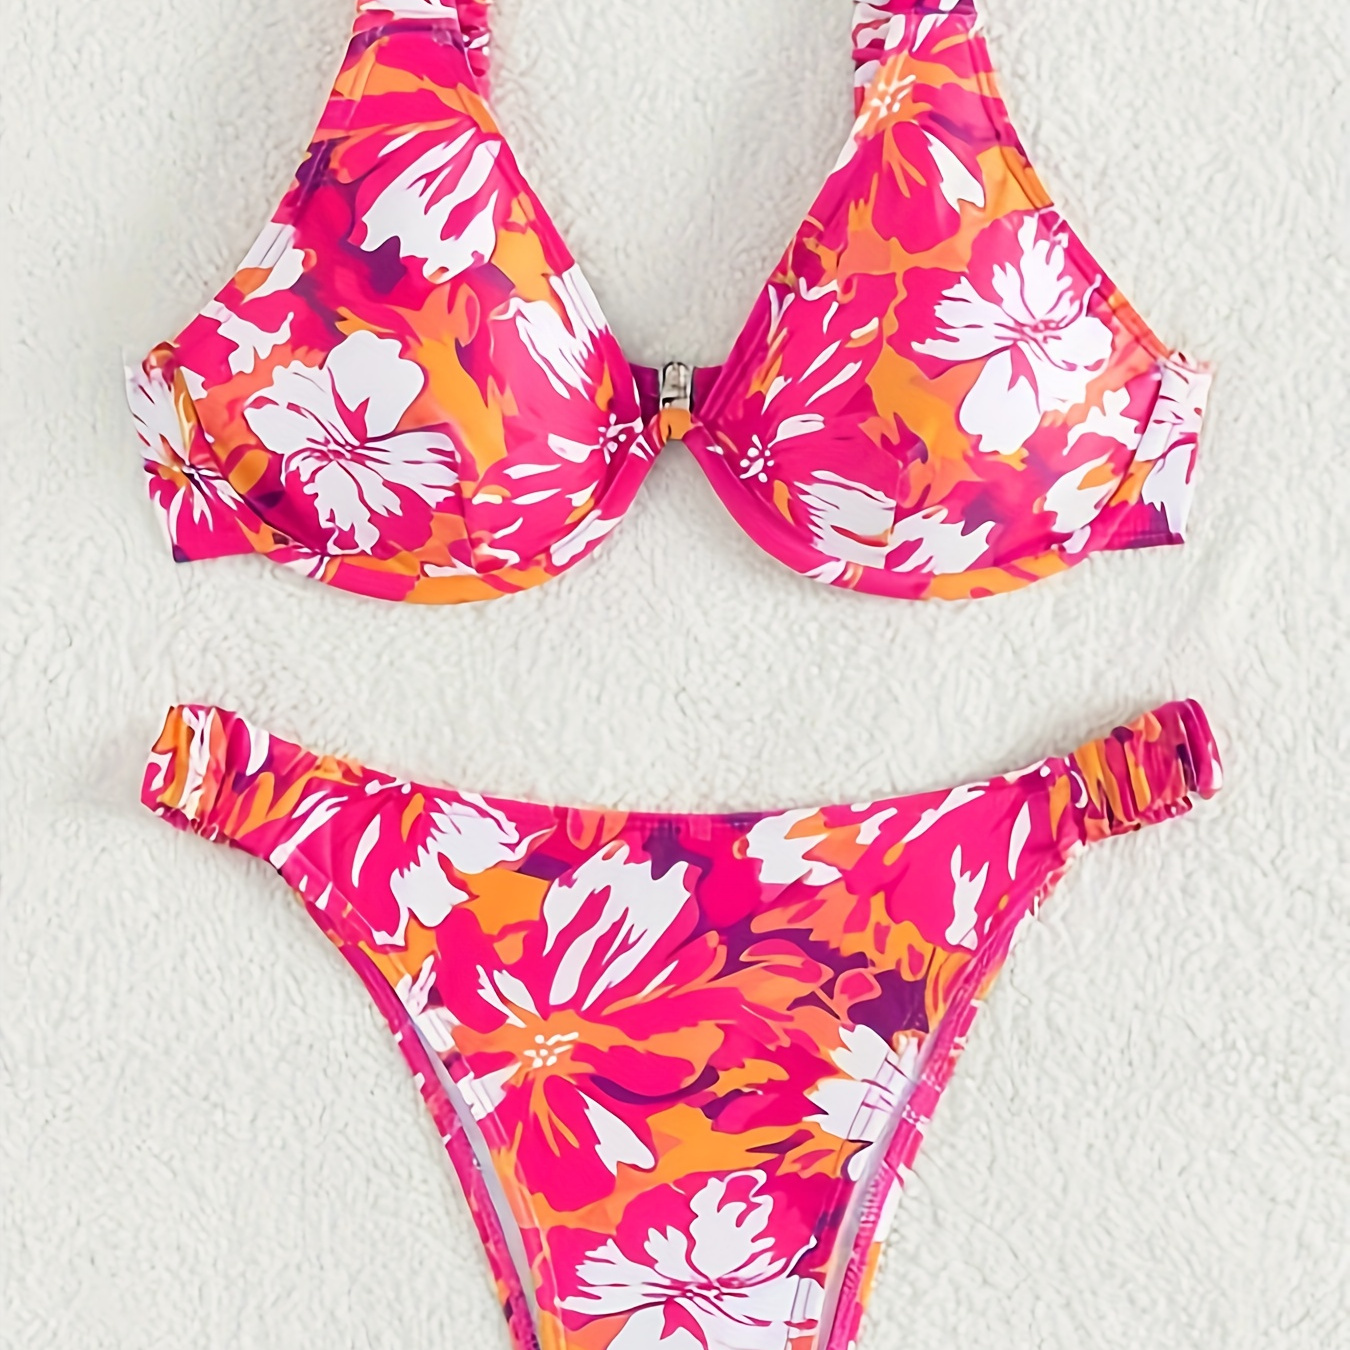 

Floral Print Women's Bikini Set, Two-piece Swimsuit With Underwire Support, Summer Beachwear, Quick-dry Swimwear, Adjustable Straps